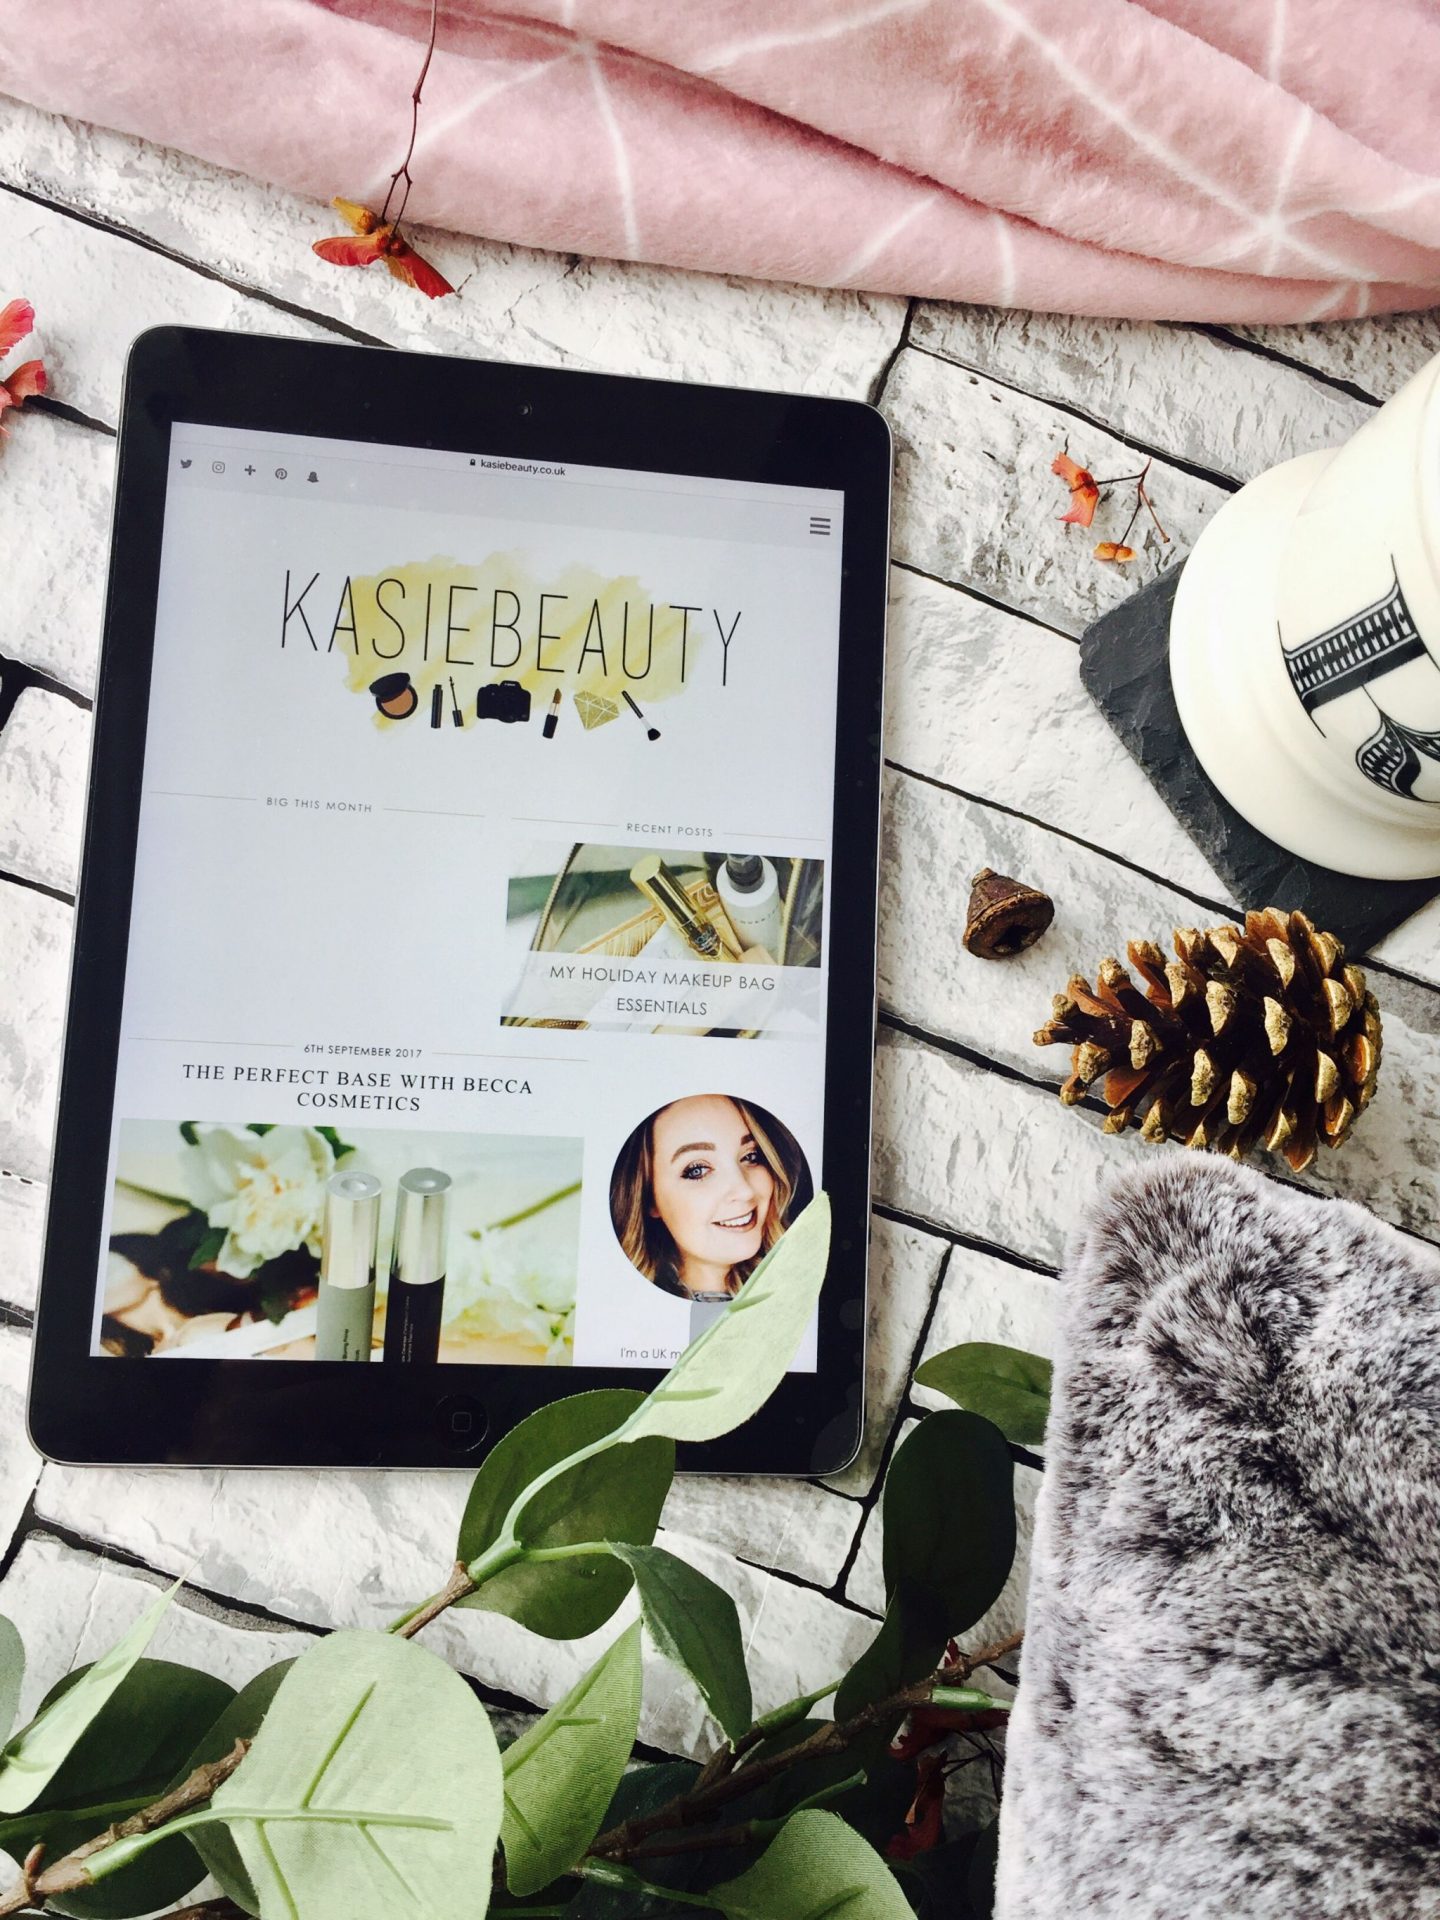 Beauty bloggers to follow Kasie Beauty